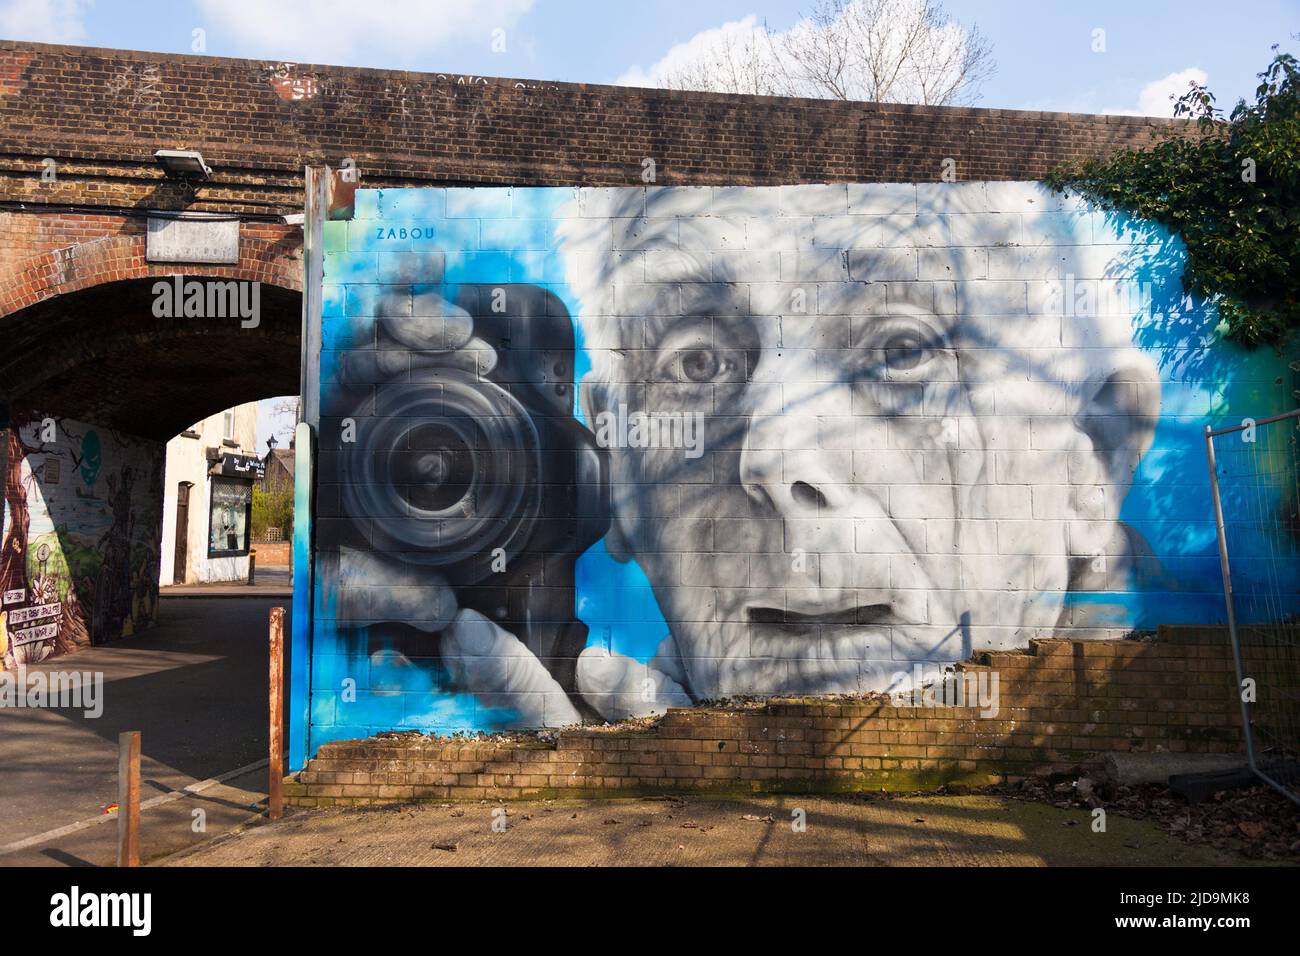 Street art, Penge, SE London, UK. Stock Photo